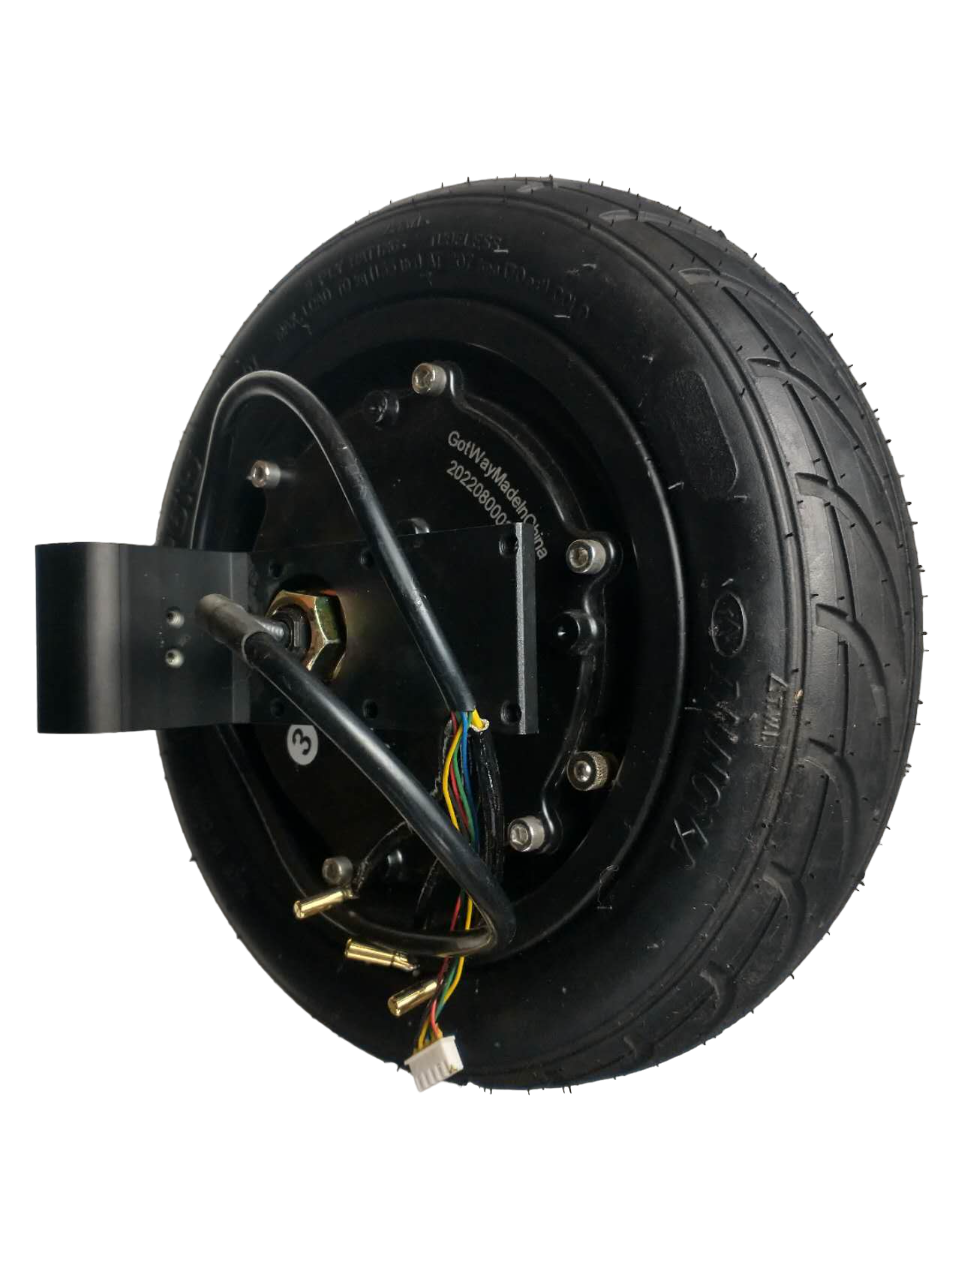 Begode Gotway Mten3 Motor unit with tire and mounts